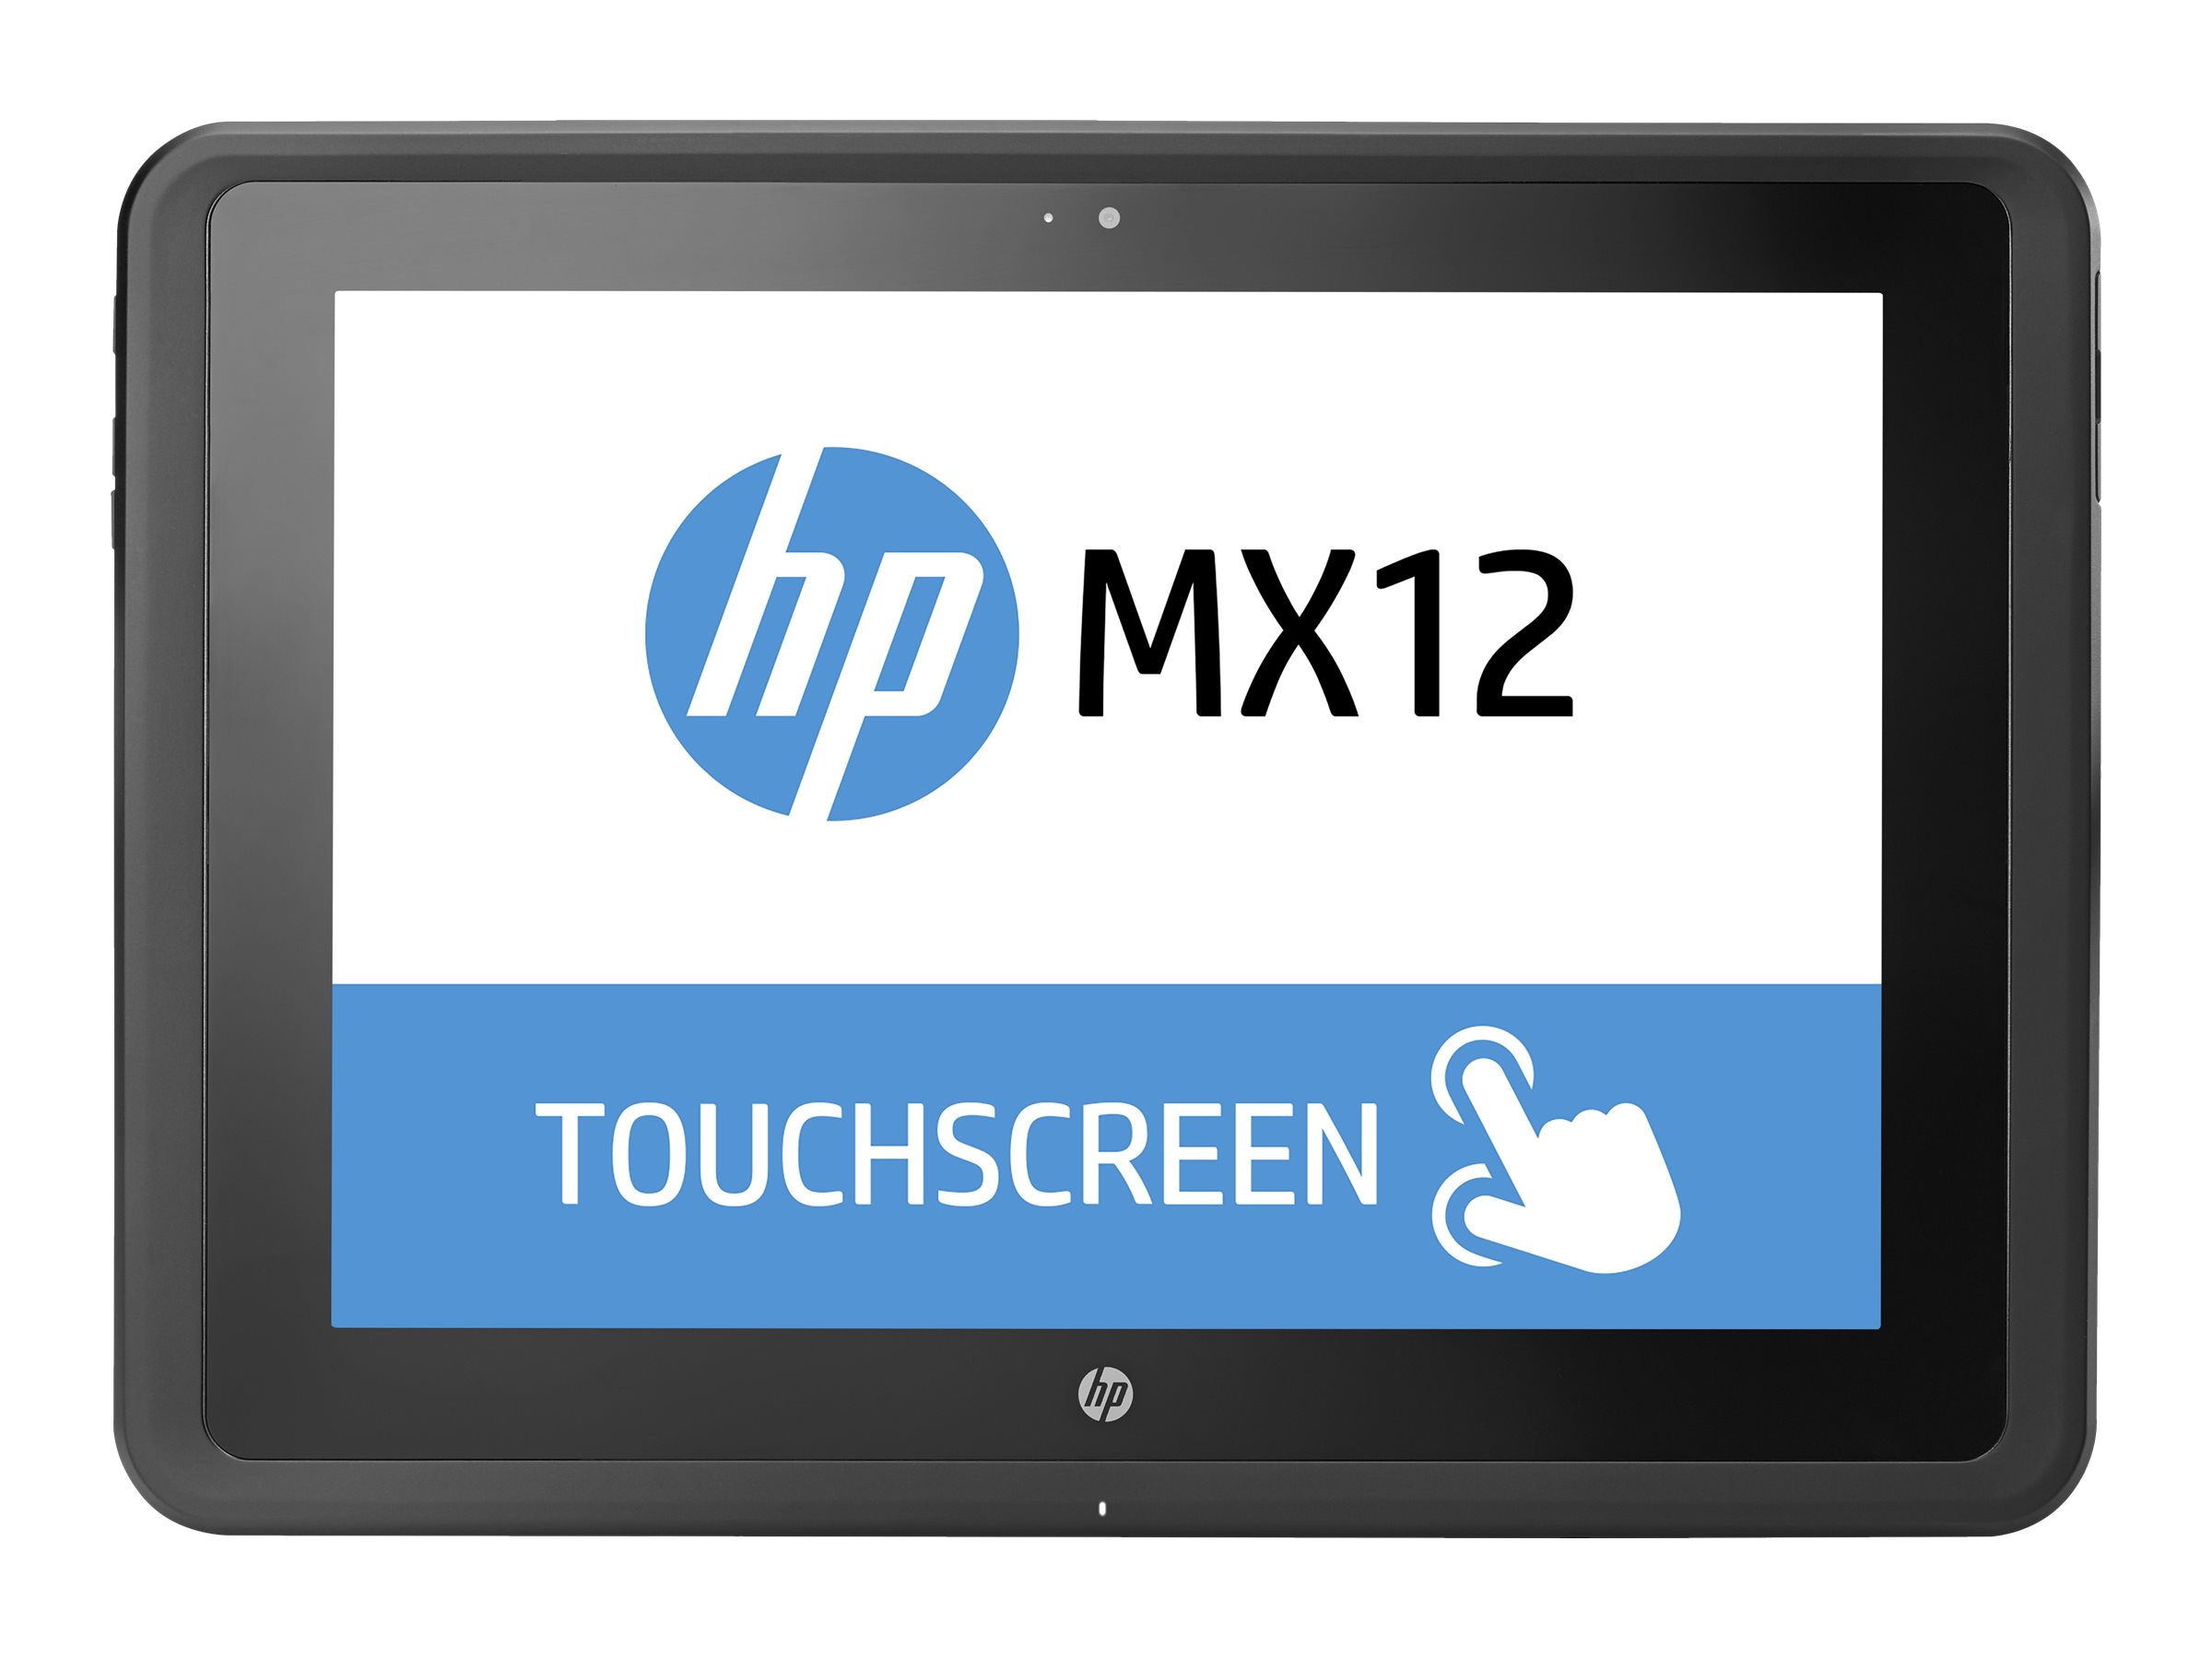 HP Pro x2 612 G2 - Tablet | www.shi.com